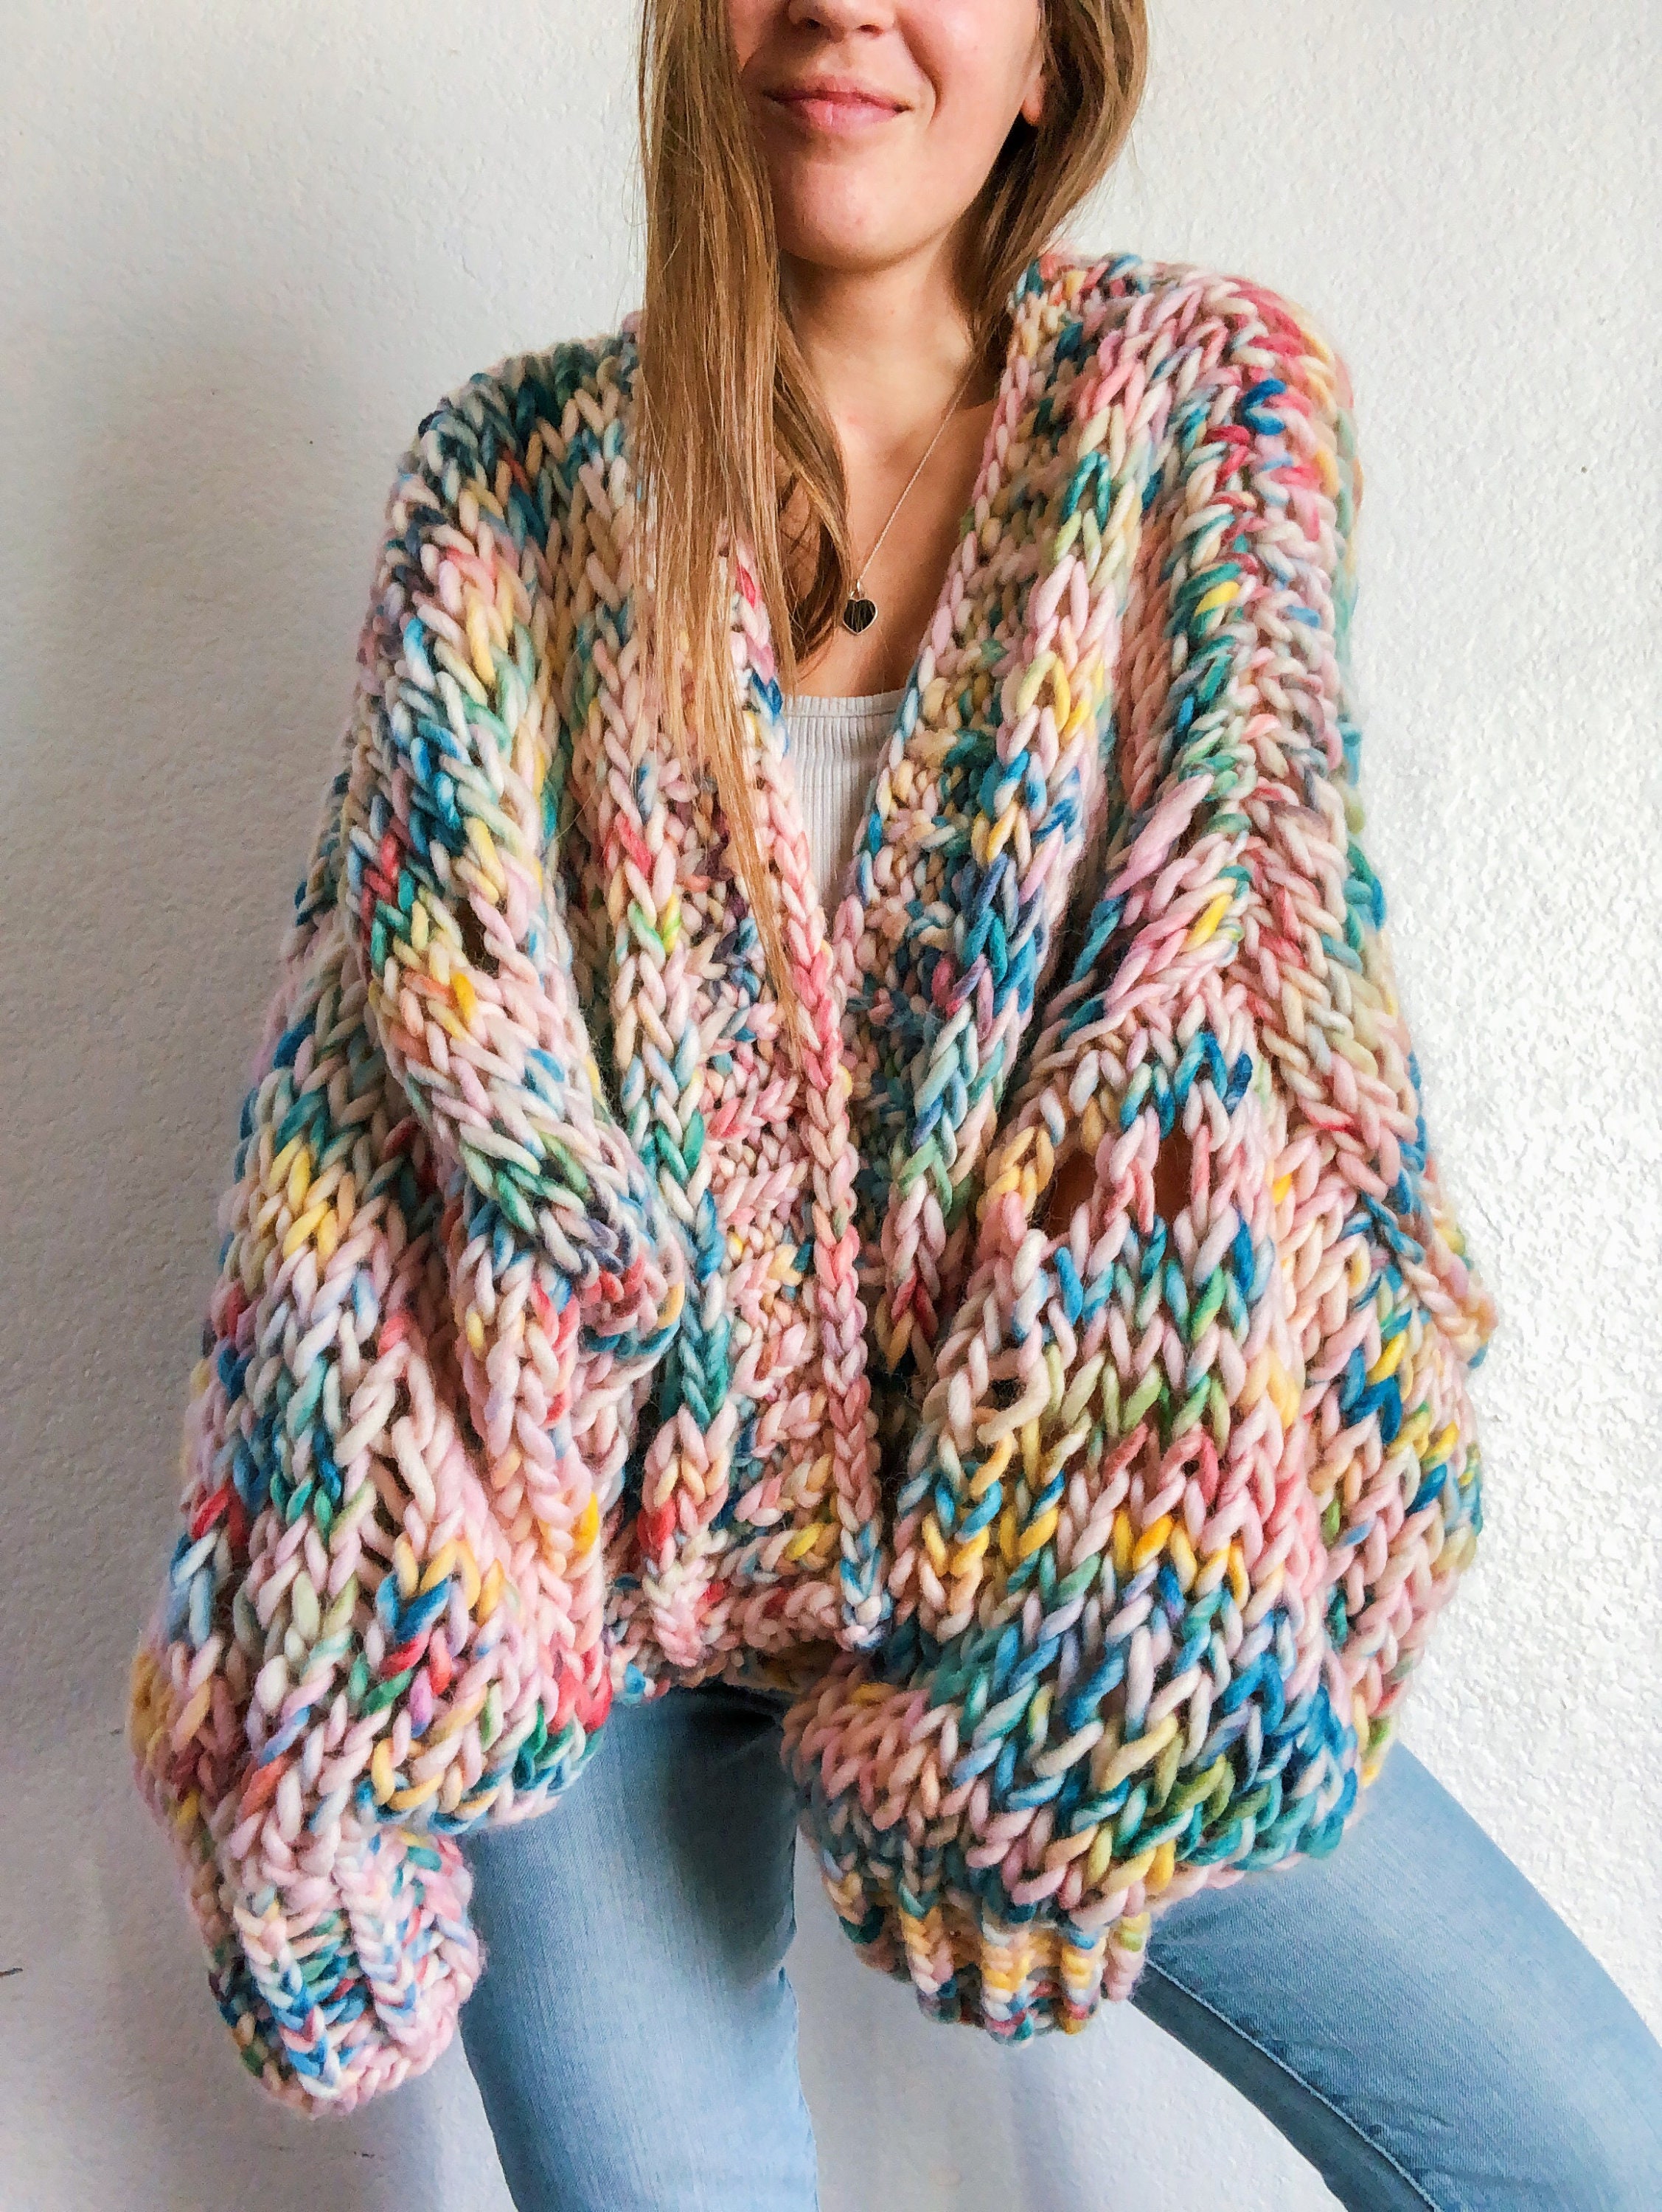 Lost Trip Cardigan Wool Sweater Knitting Pattern - Etsy